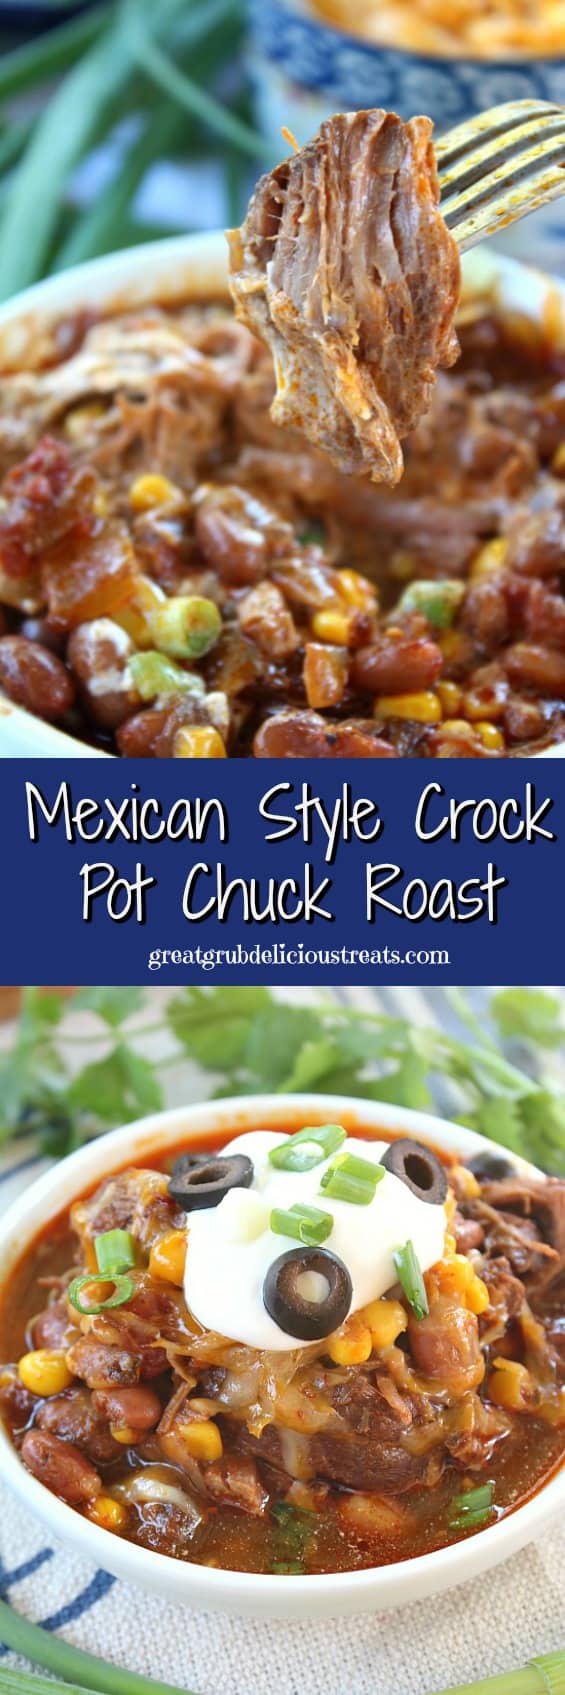 Mexican Style Crock Pot Chuck Roast